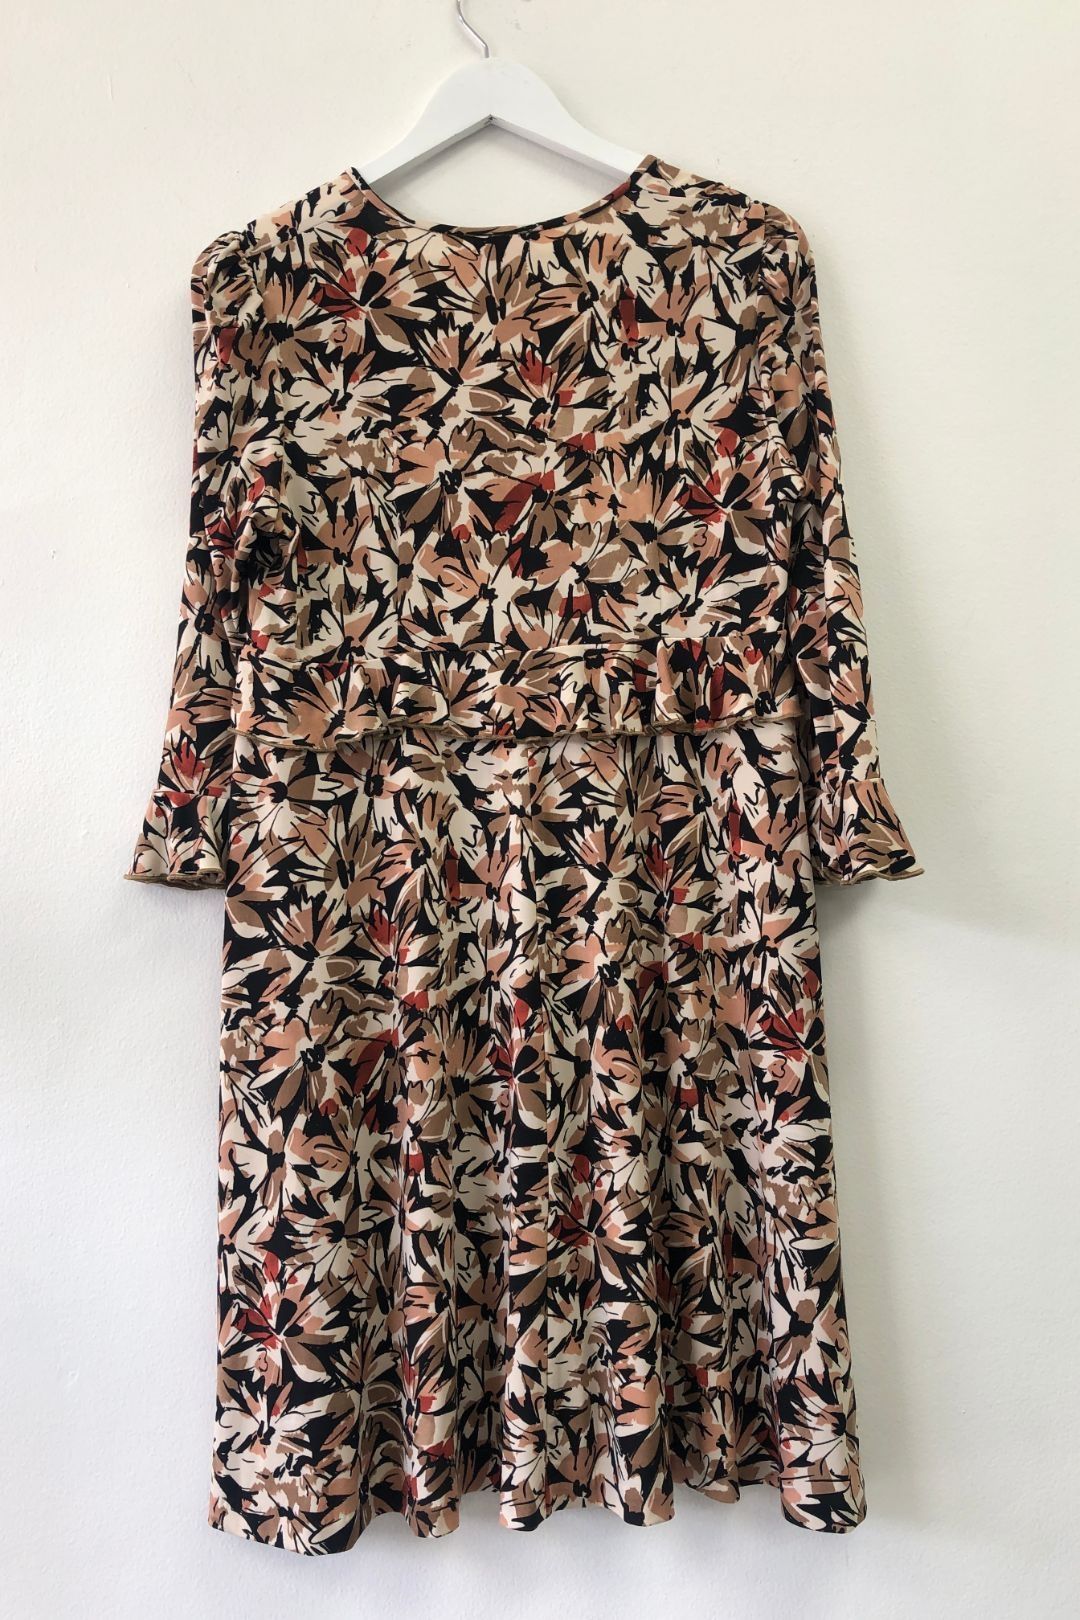 Leona Edmiston - Price Style Shift Dress